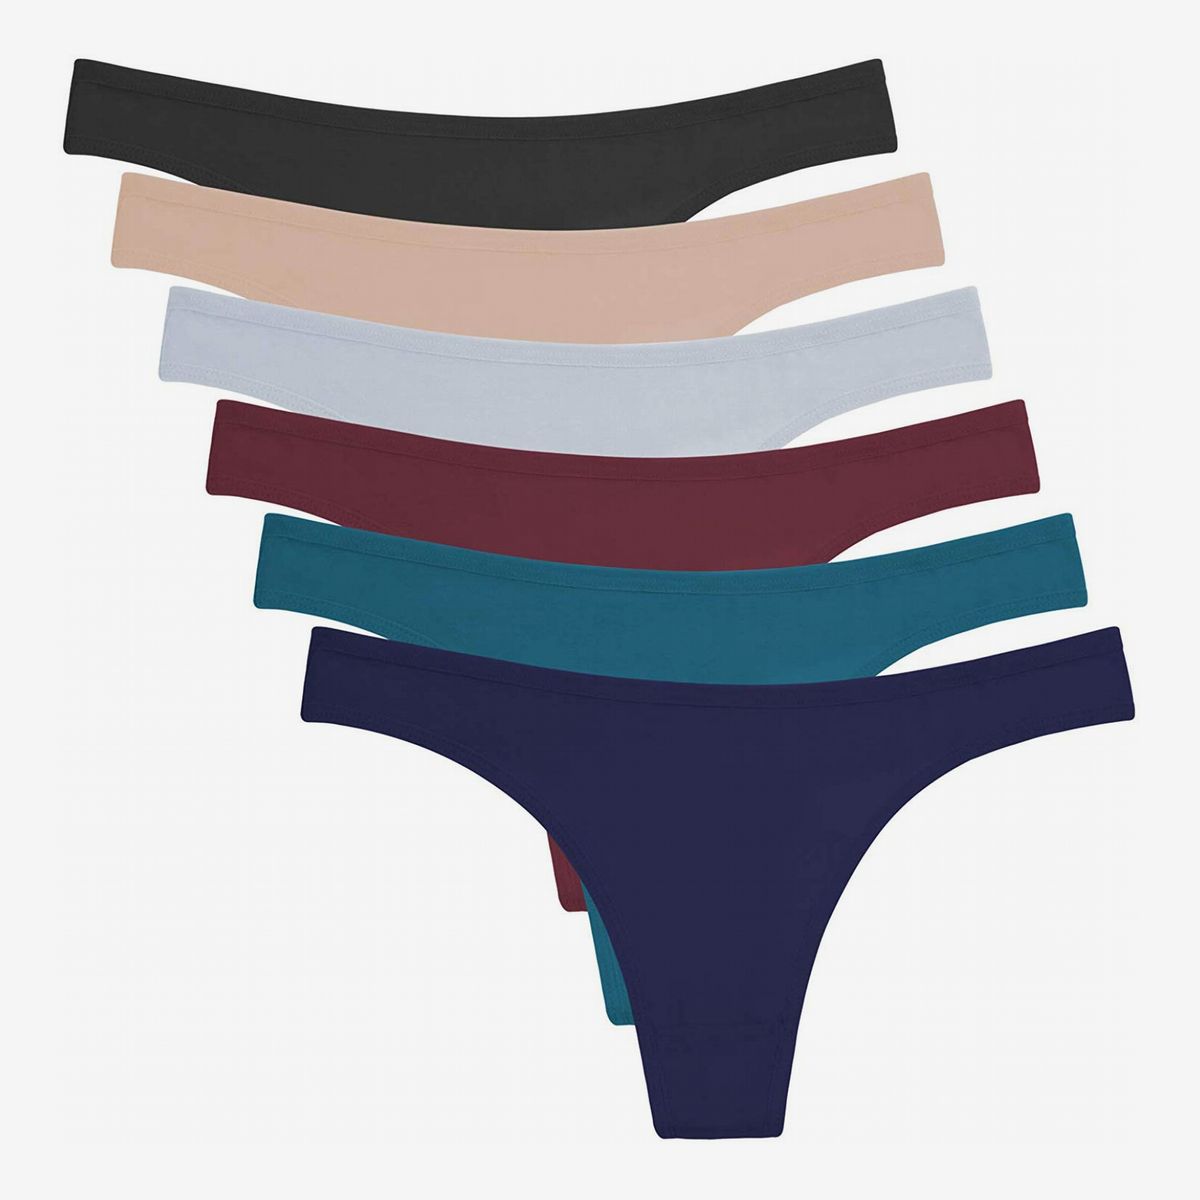 Regular & Plus Size POKARLA Women's Thongs Cotton Breathable Panties Bikini Underwear 5-Pack 